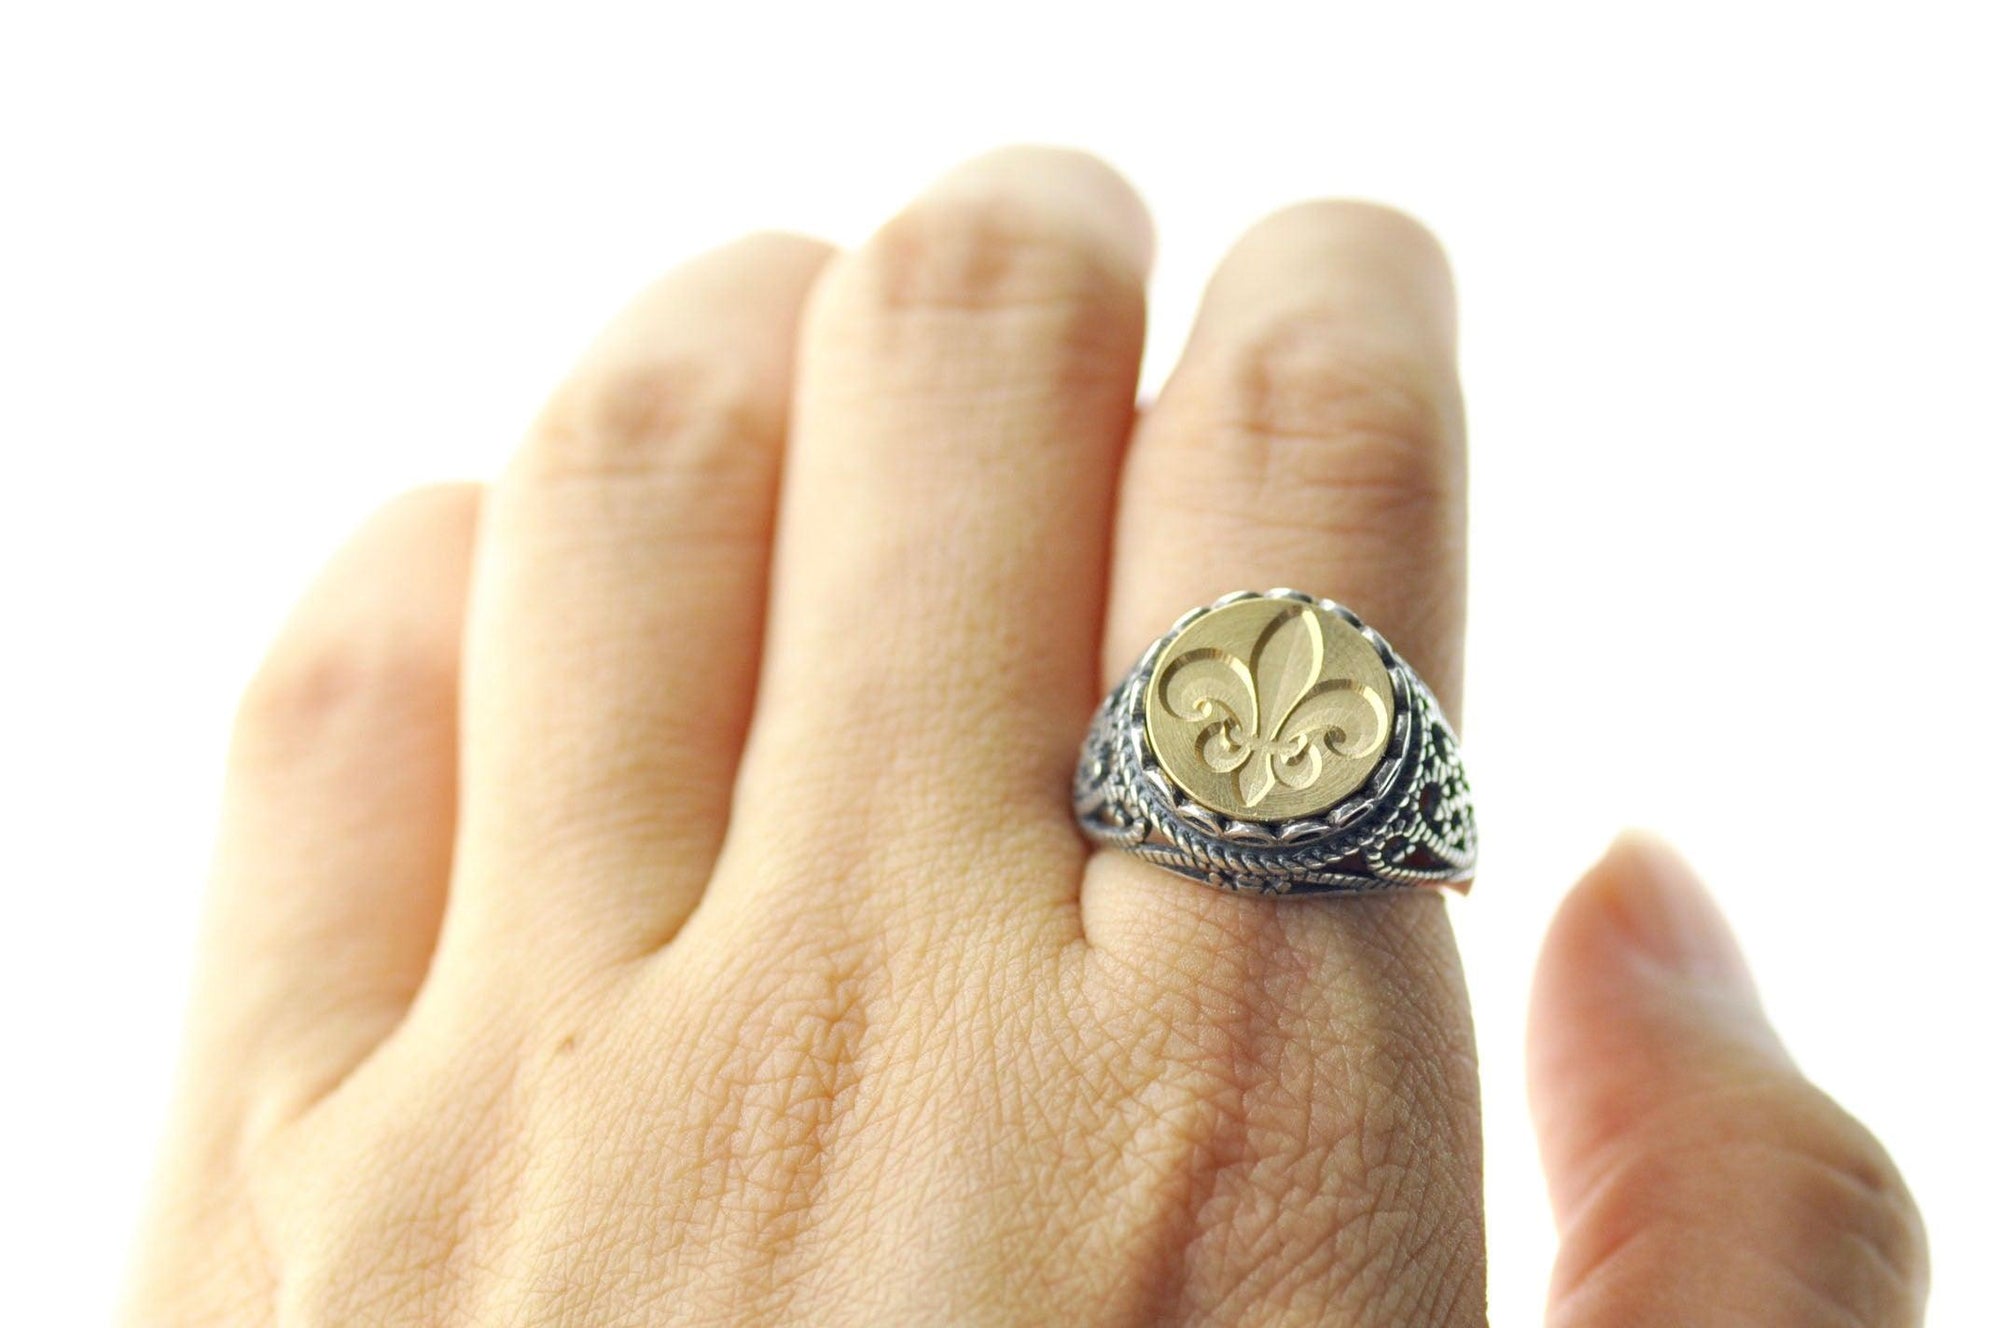 Fleur De Lis Signet Ring - Backtozero B20 - 12l, 12mm, 12mm ring, Fleur de Lis, her, lace, ring, signet ring, size 10, size 7, size 8, size 9, wax seal, wax seal ring